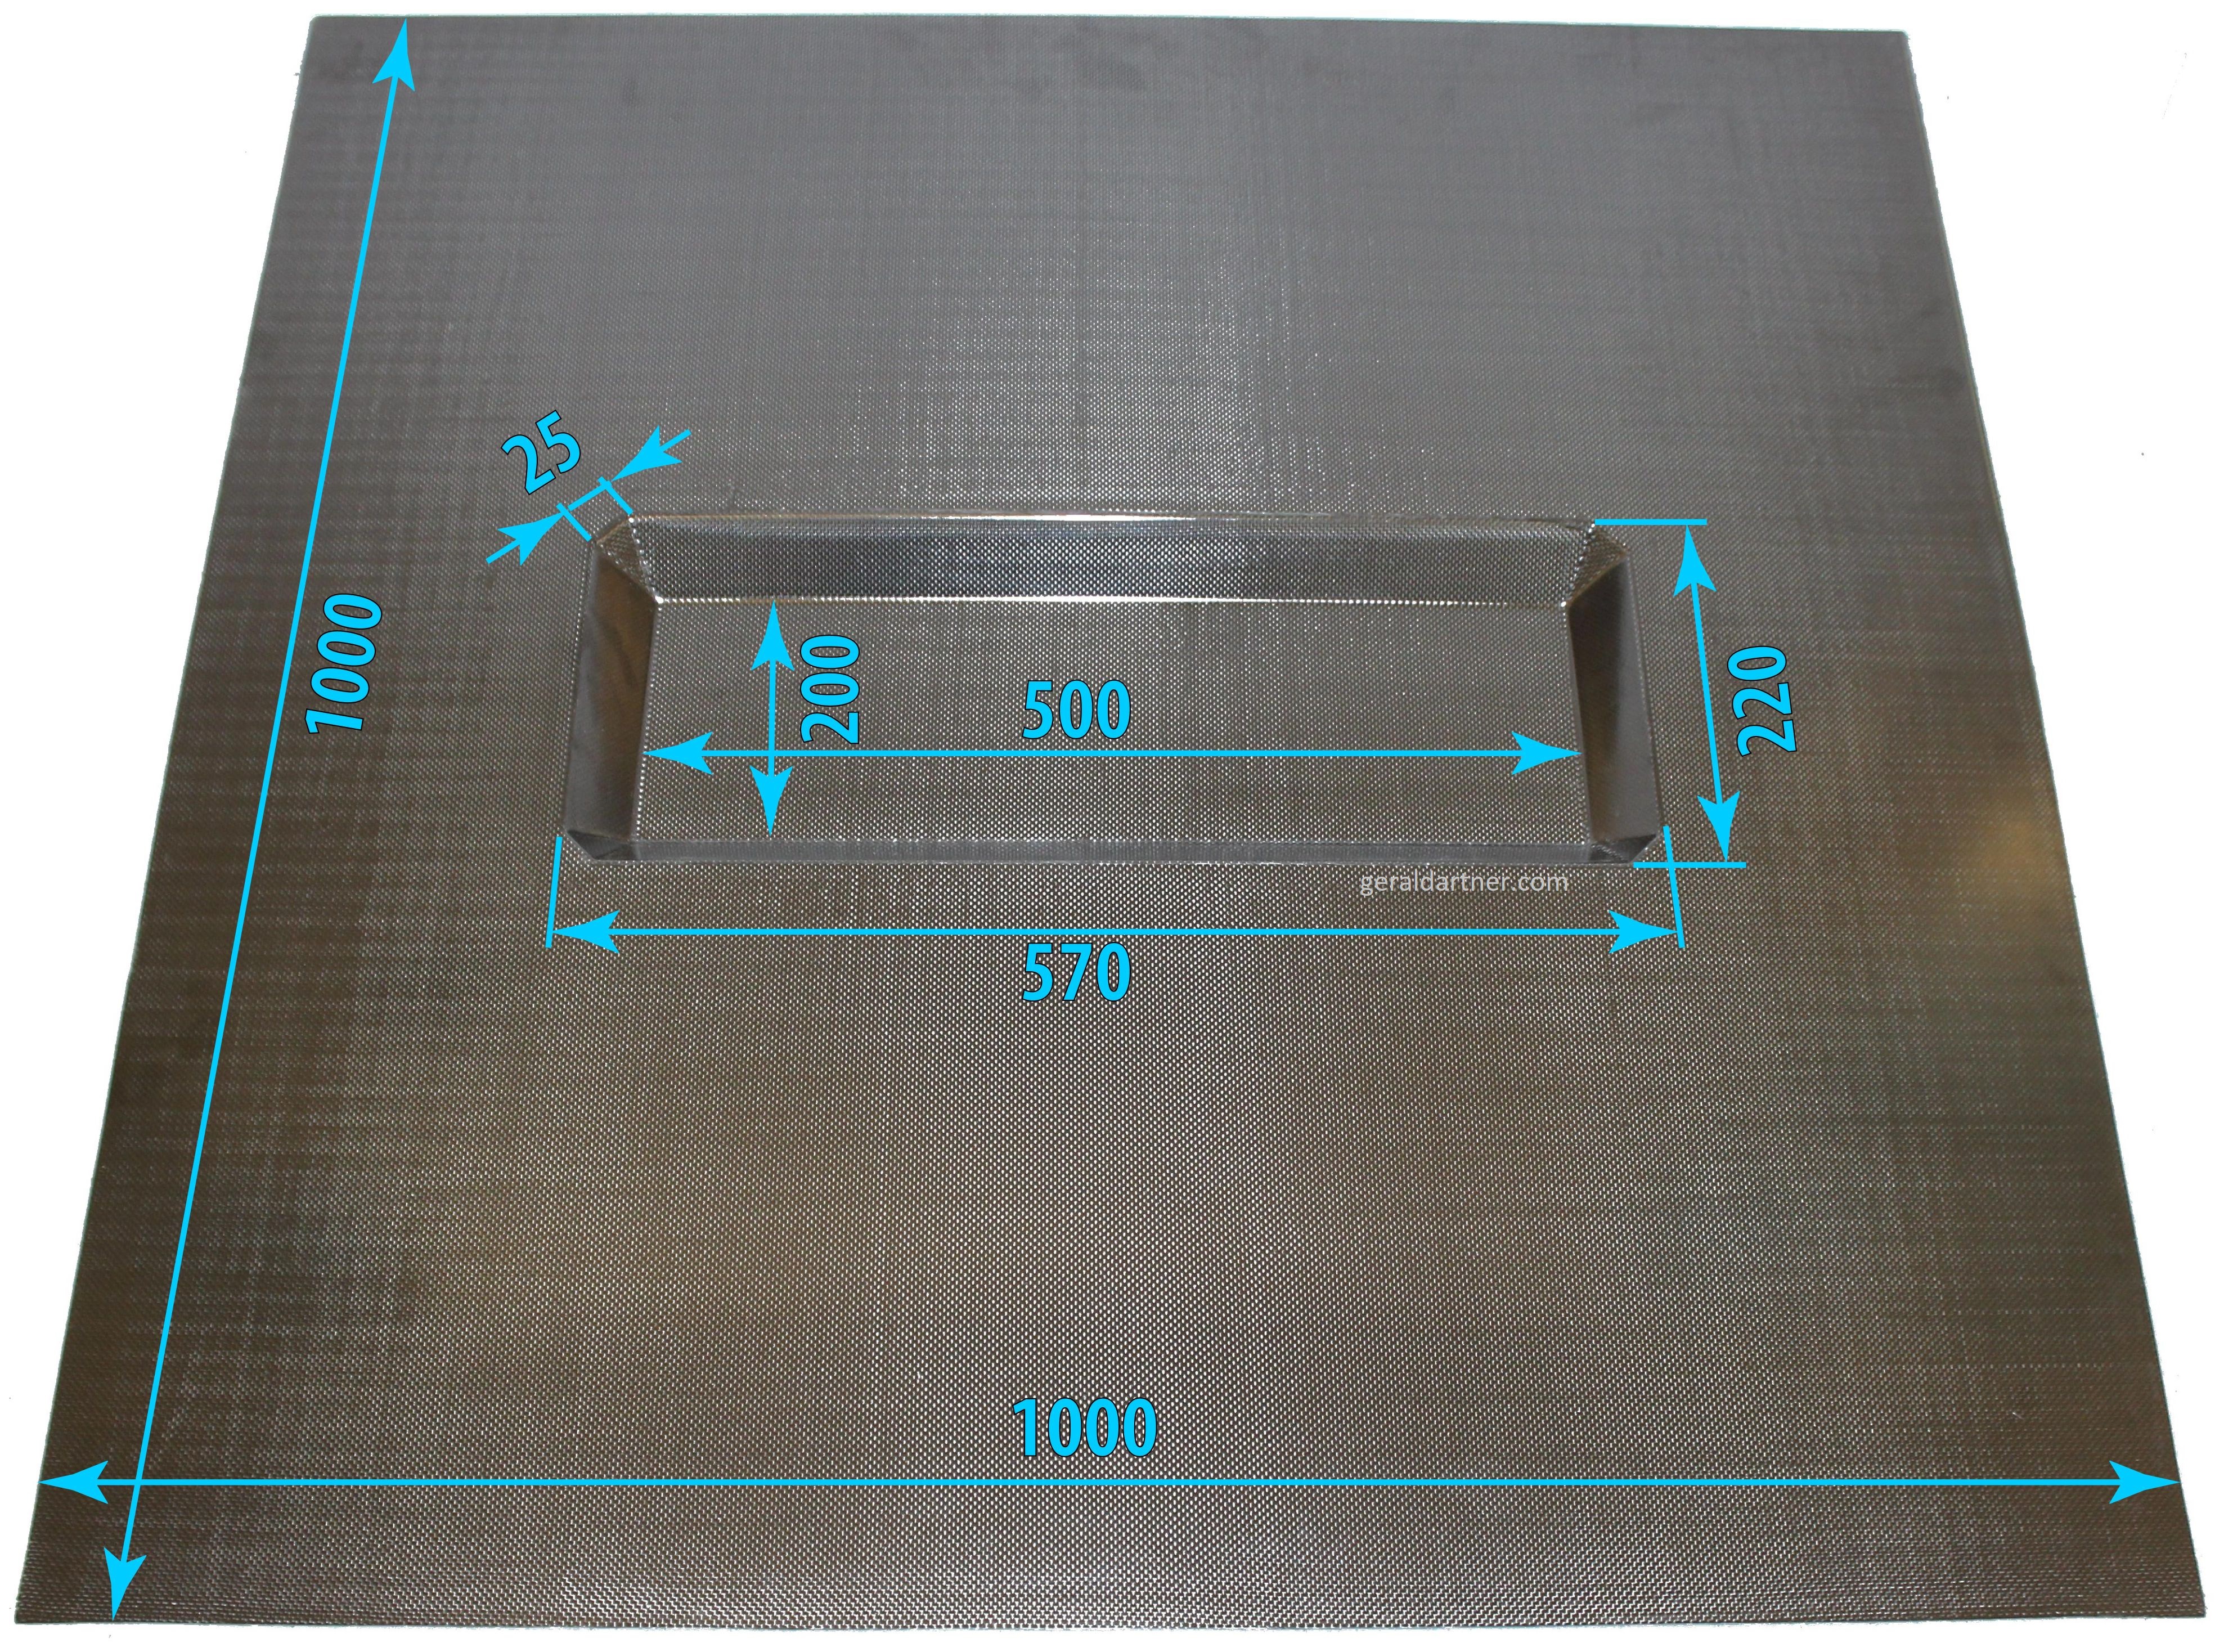 Dimensions of an Automotive CFRP Antenna Cavity Prototype